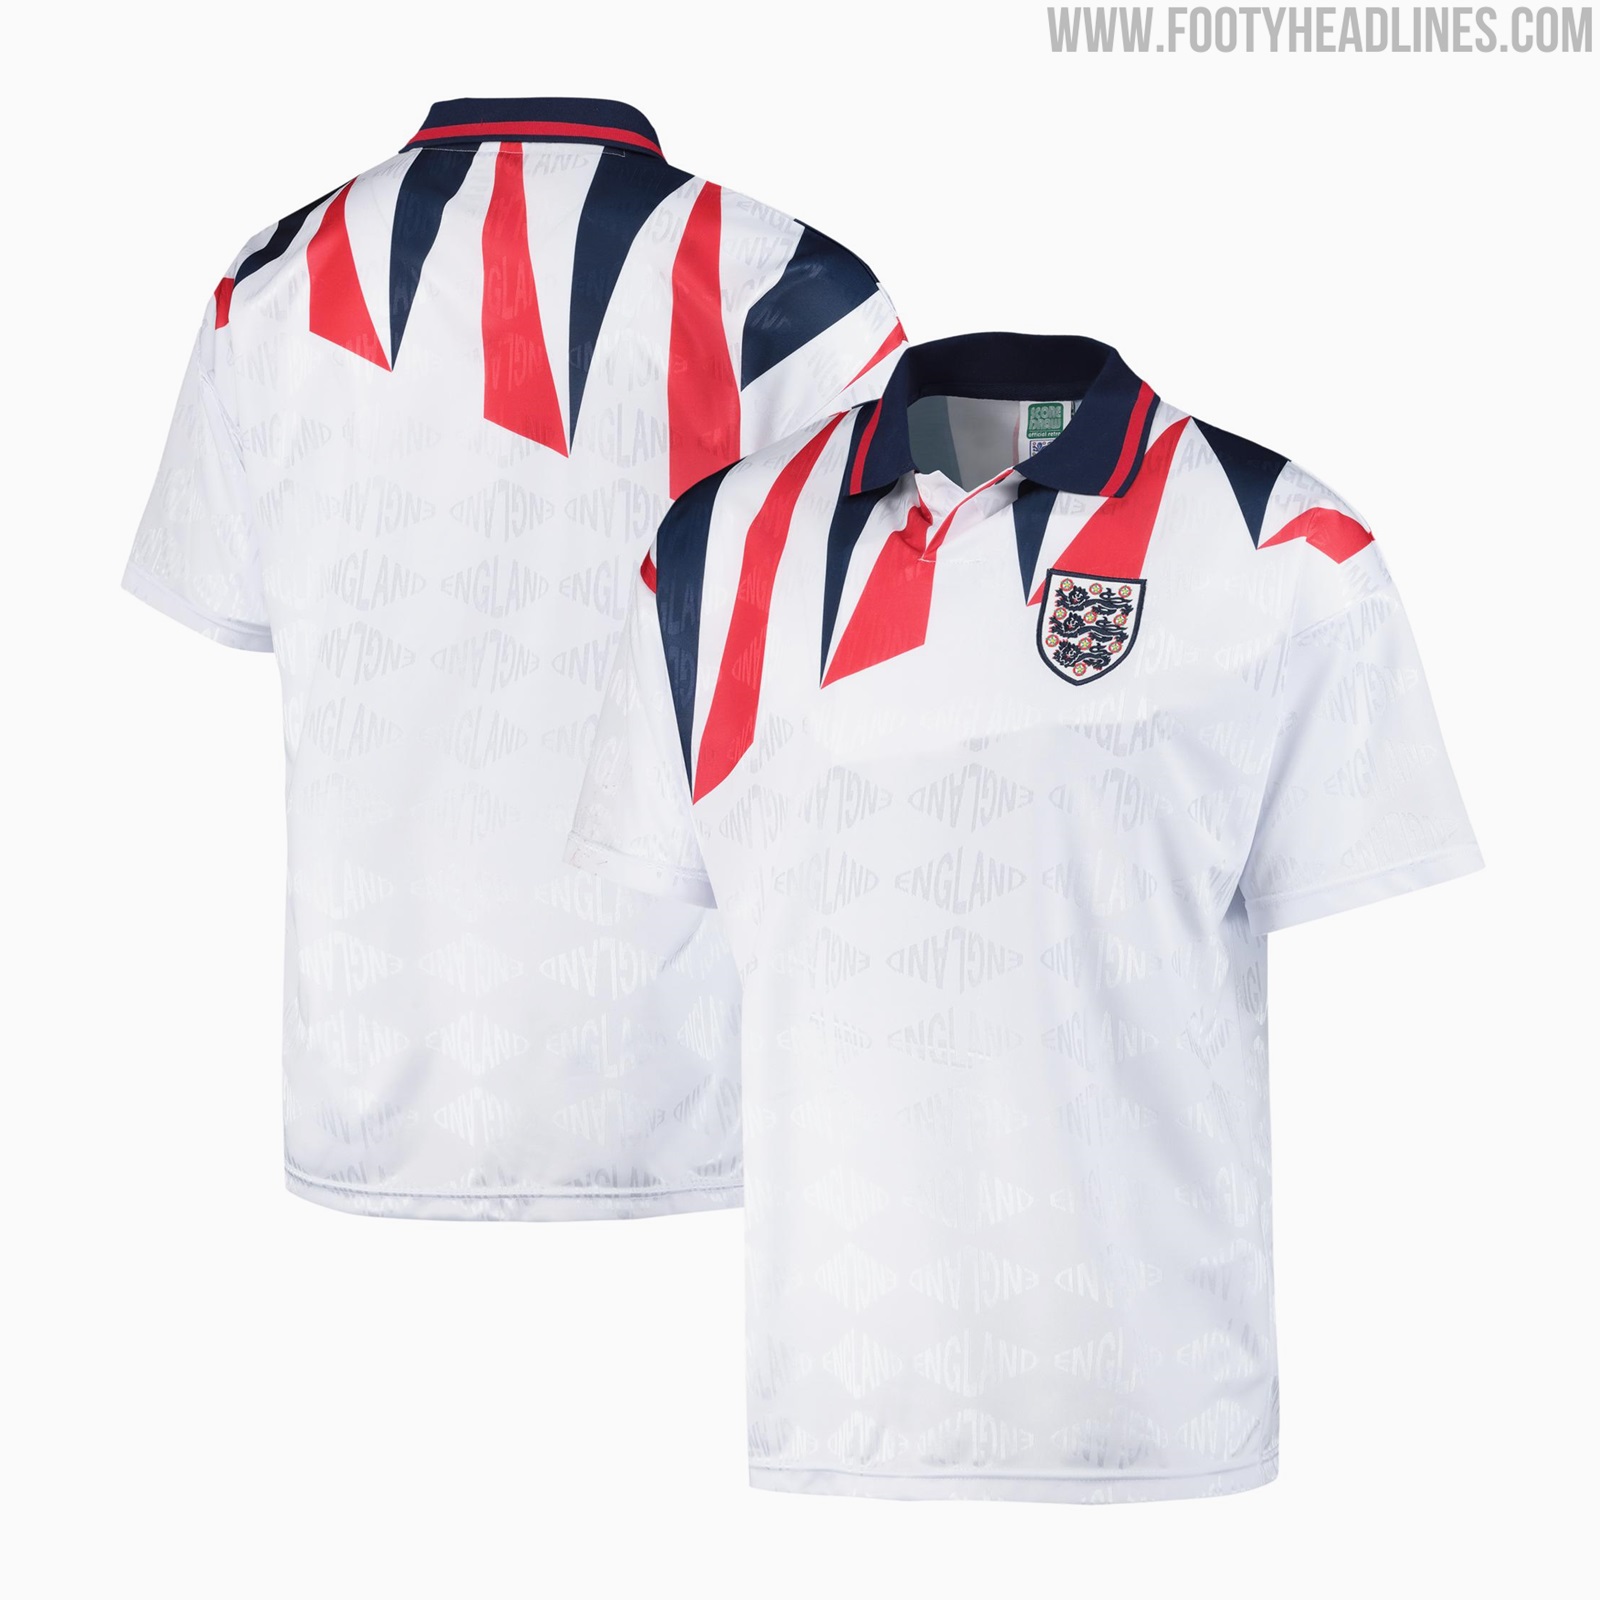 Buy Official Retro England Football Shirts